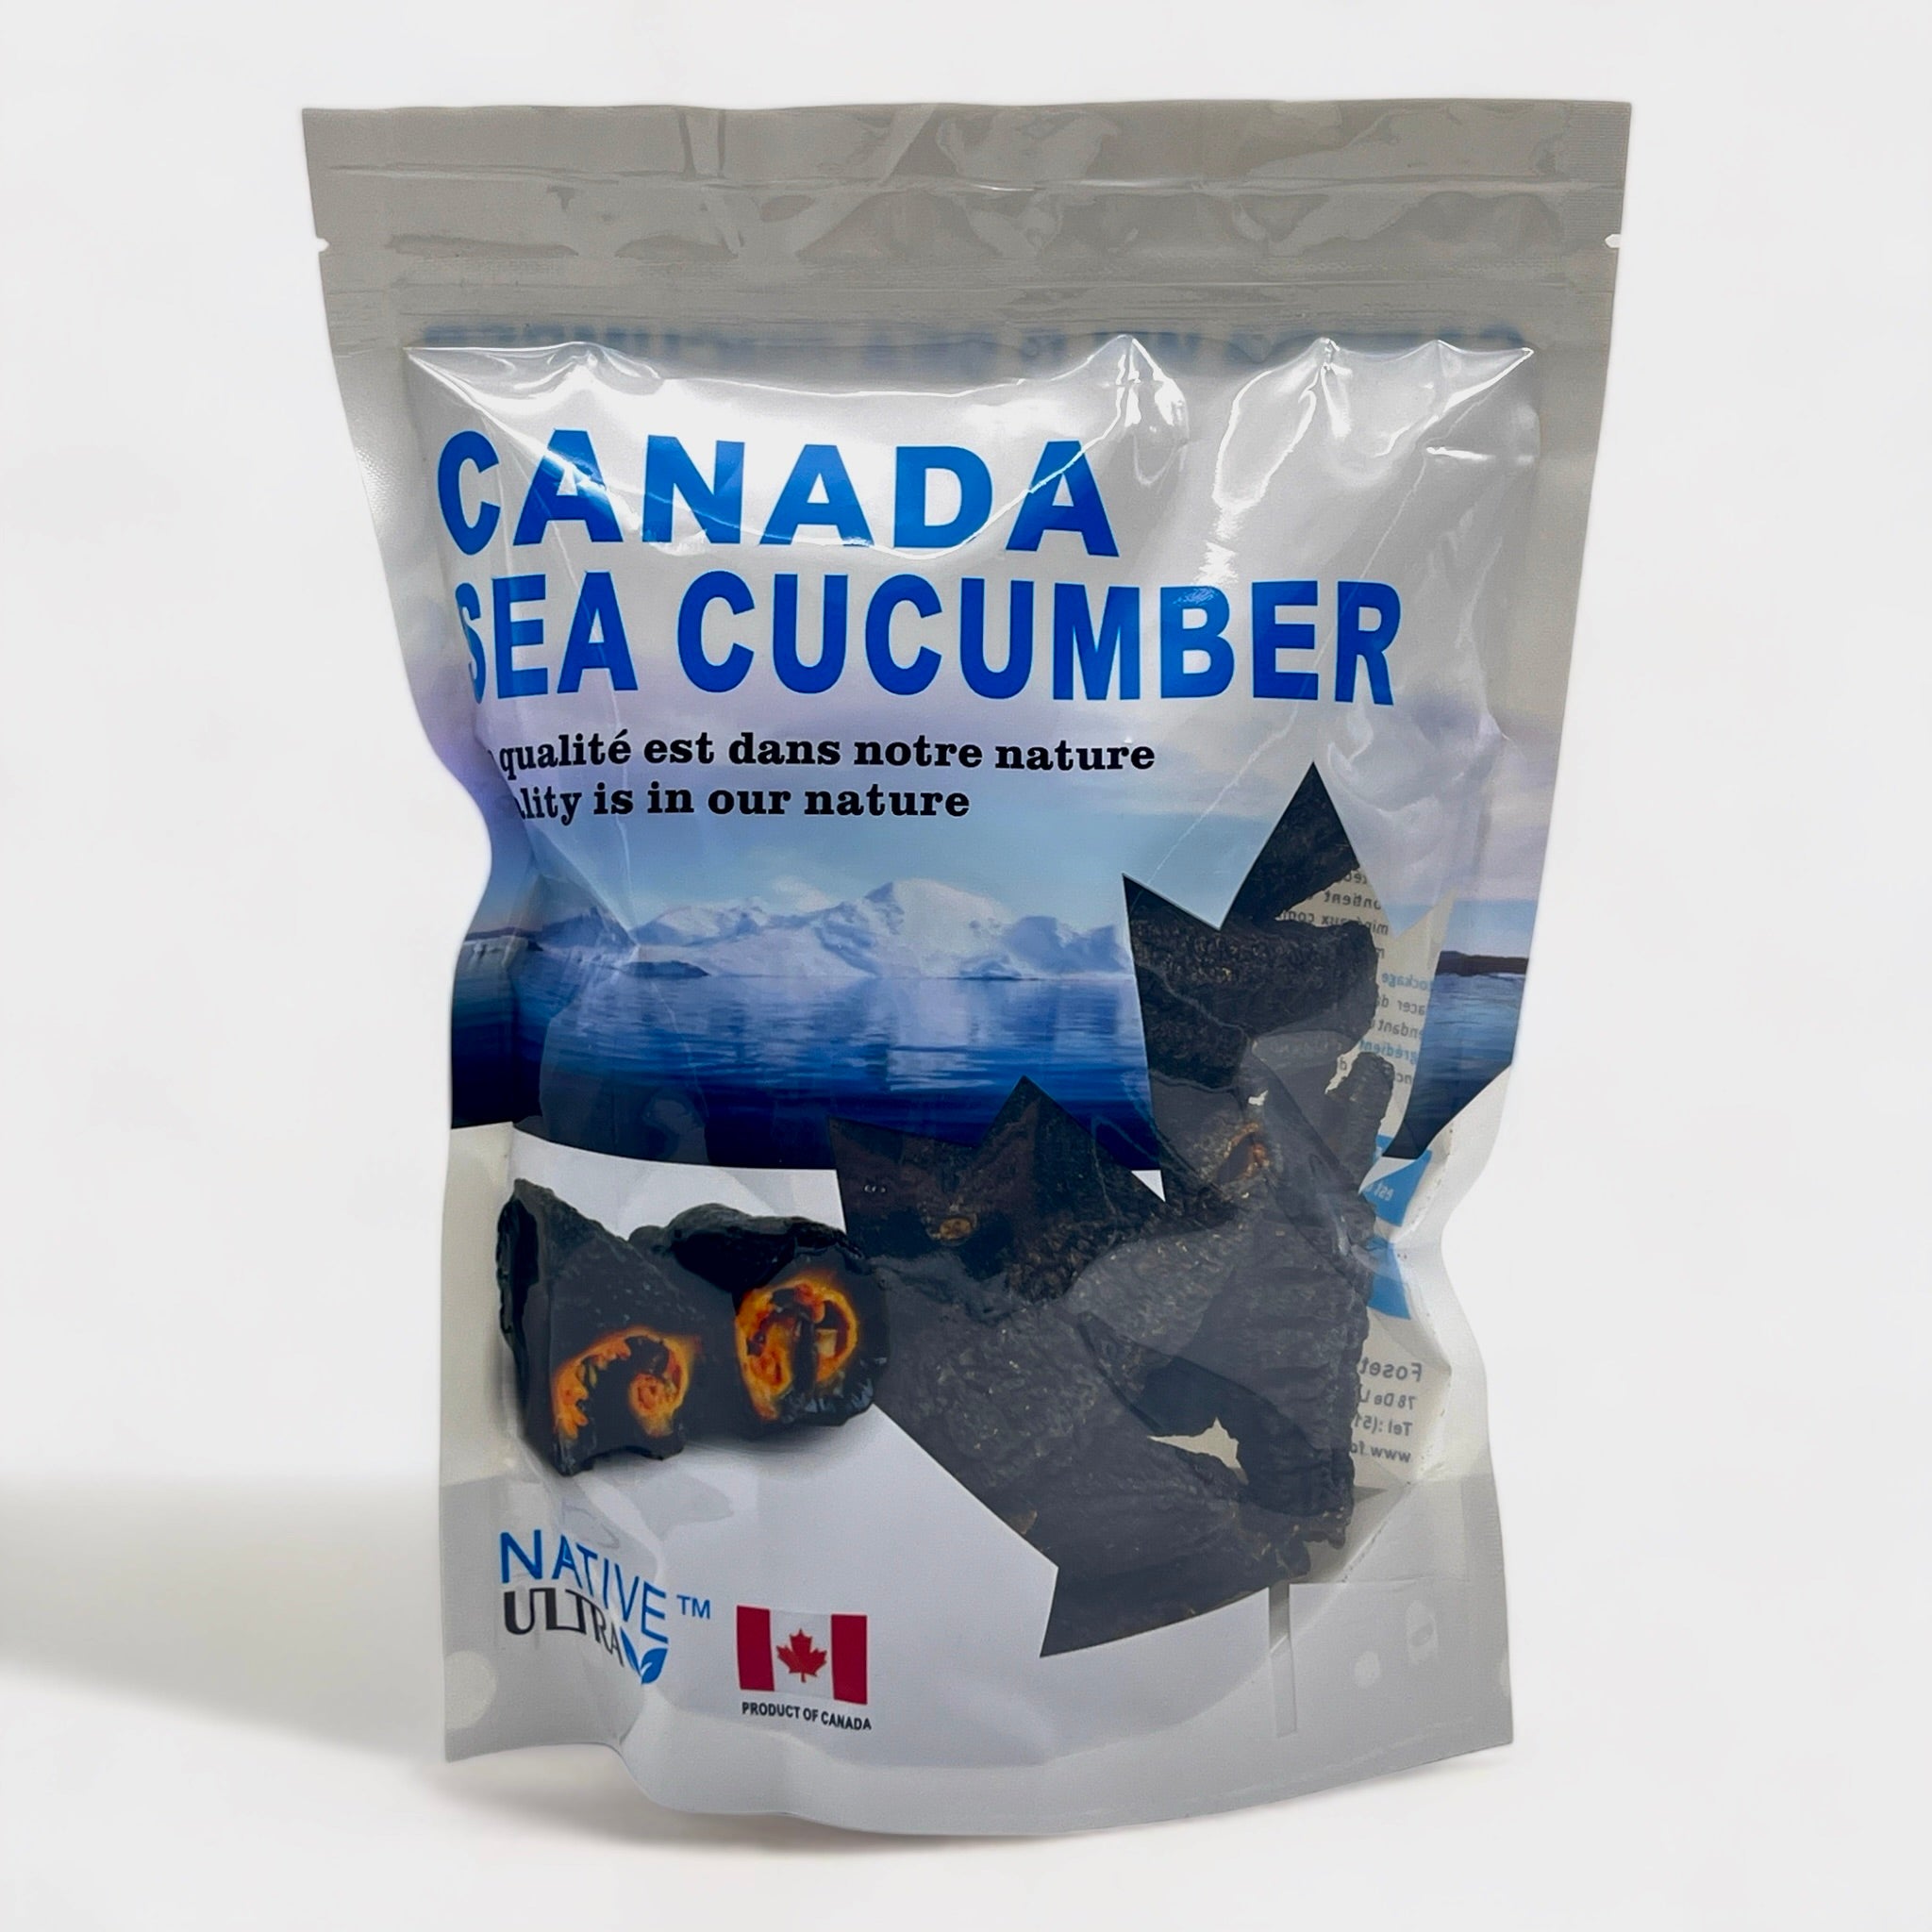 NATIVE ULTRA Canada Wild Sea Cucumber 13-16 pieces, 454g/Bag